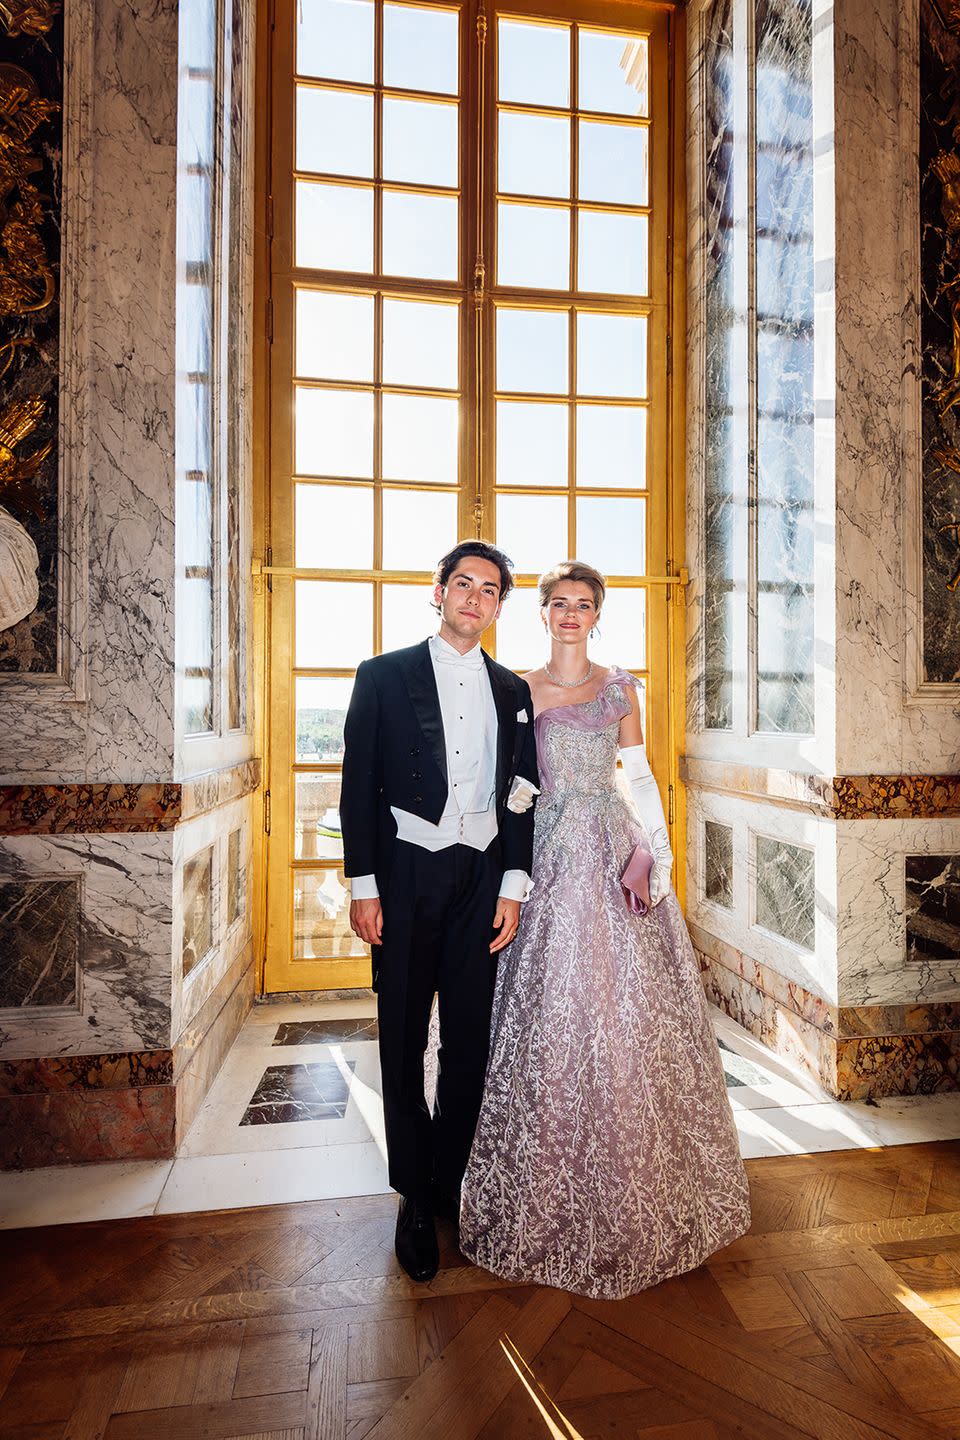 Viscount Pierre-Louis Jaunay and Her Royal Highness Princess Zita of Boubon-Parma